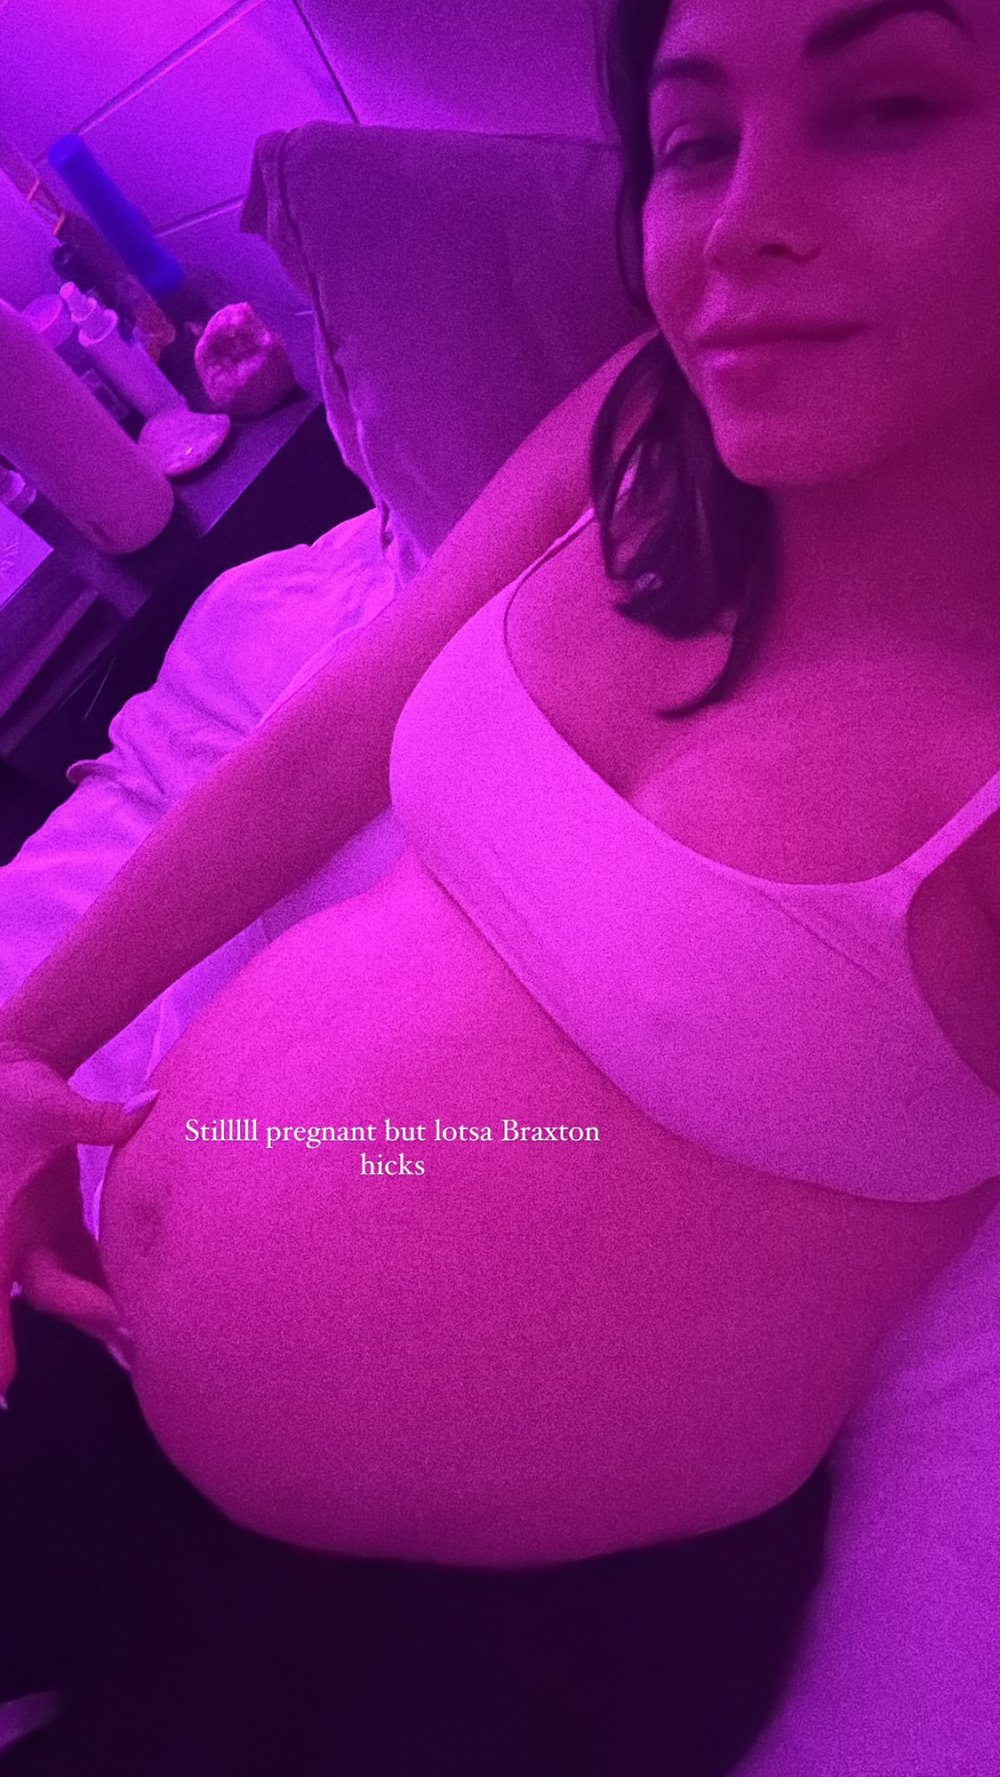 Pregnant Jenna Dewan Is Having 'Lotsa' Braxton Hicks Contractions: 'Ready to Pop'